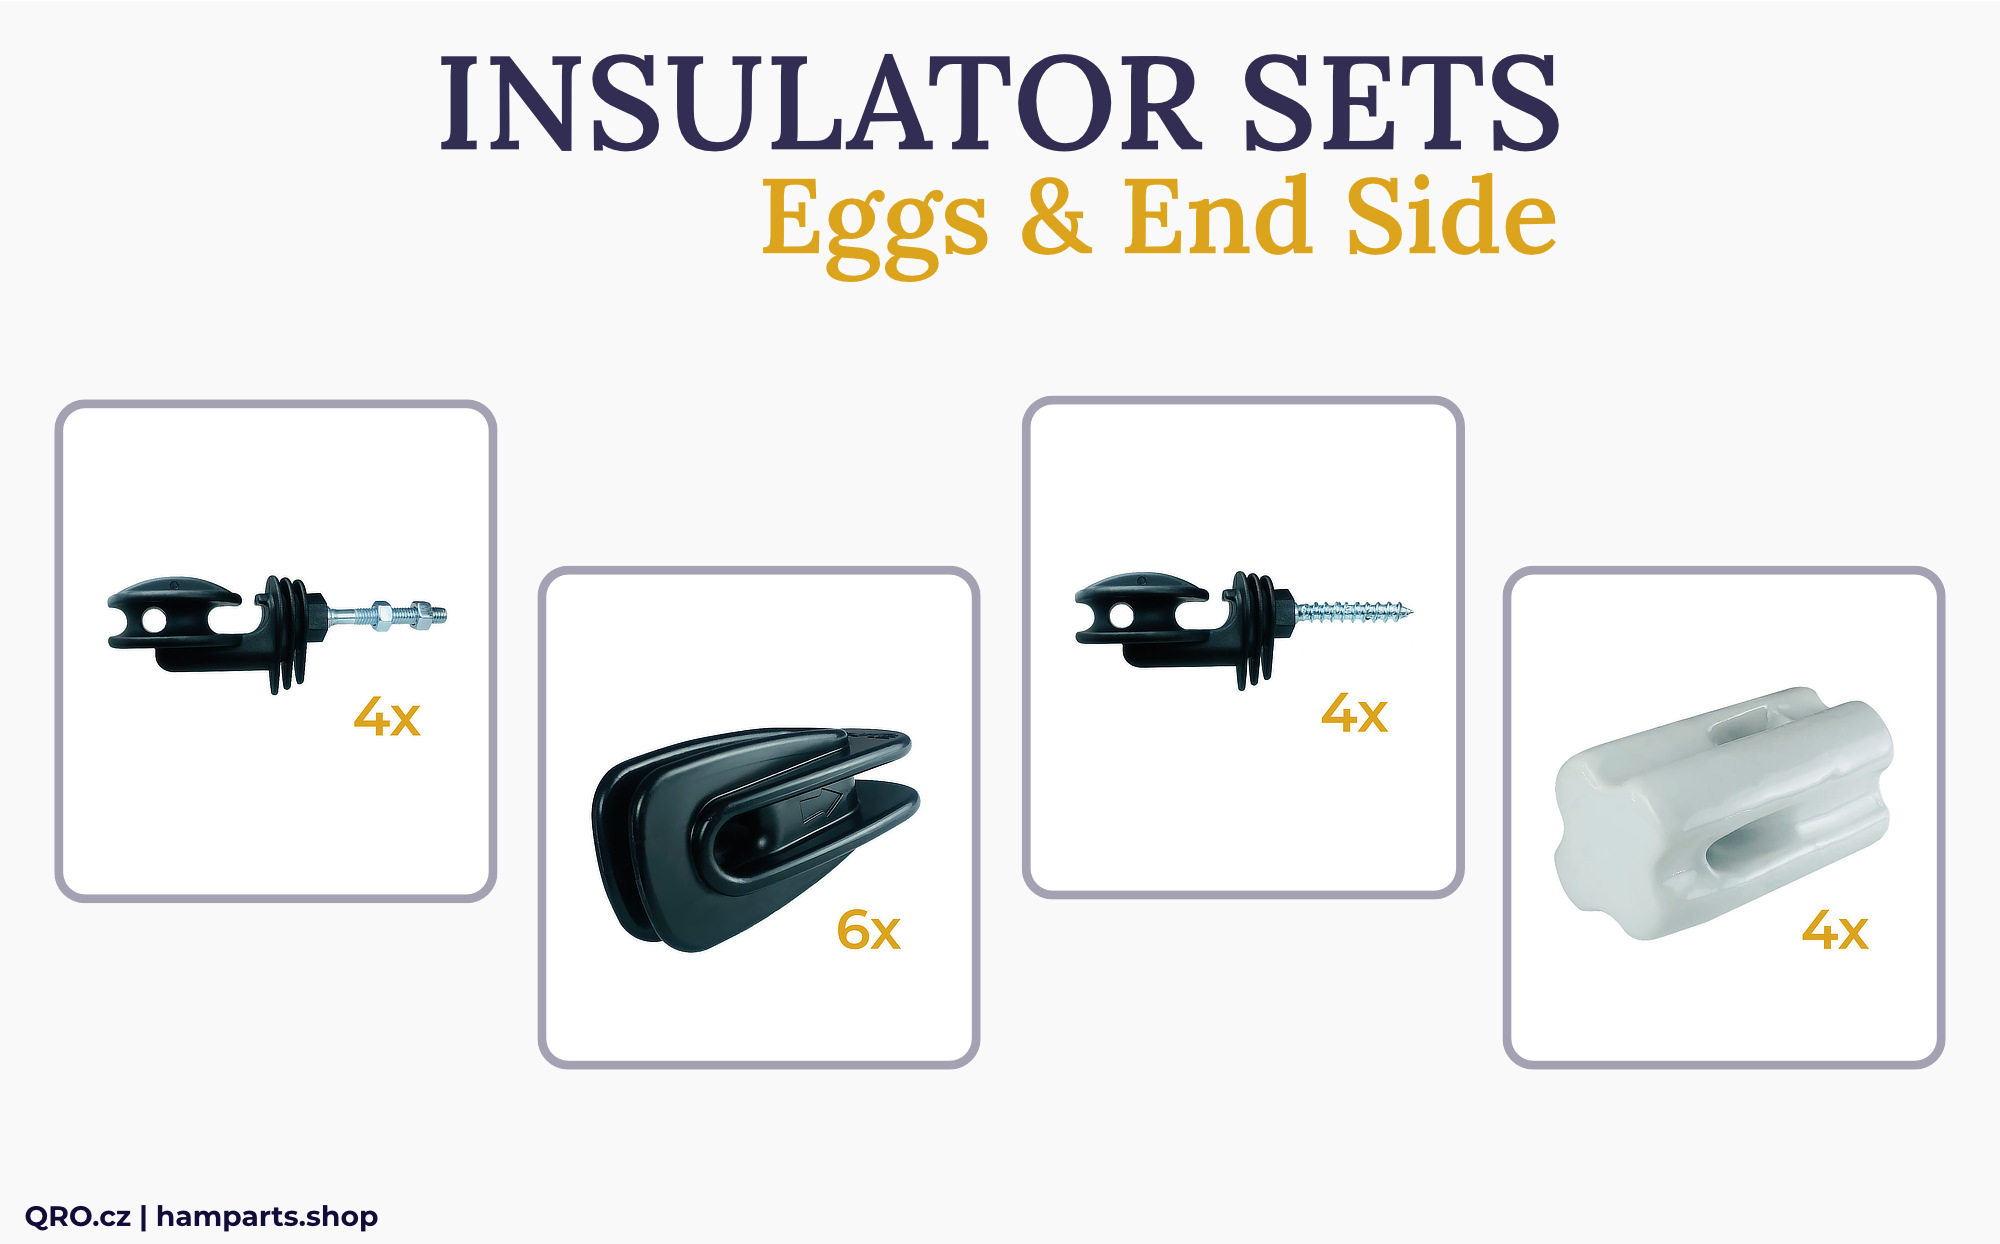 set insulator eggs and end side corner insulator qro.cz hampart.shop